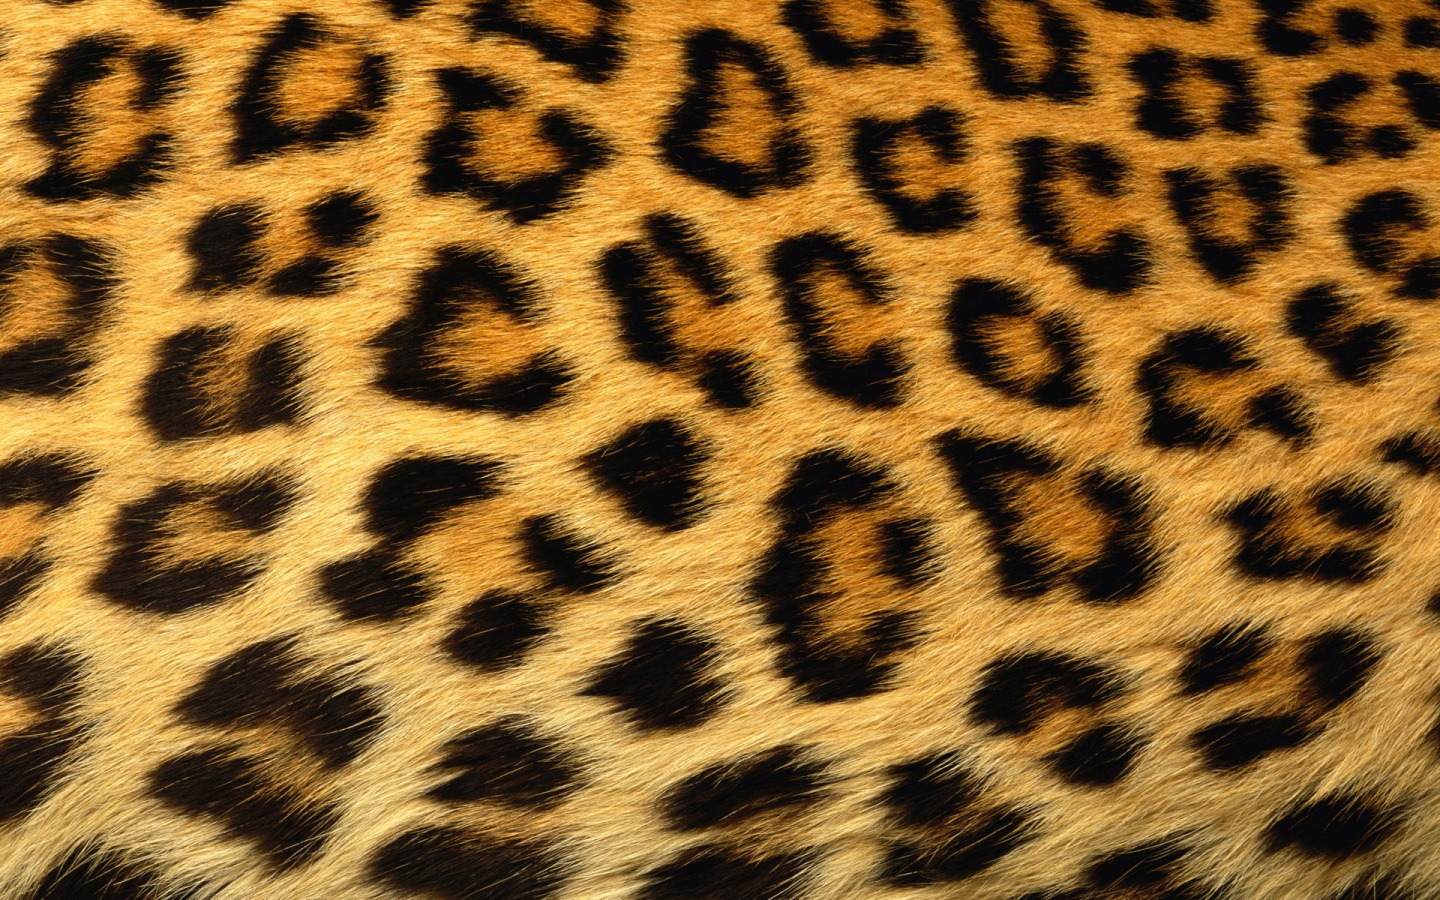 Leopard Print Background X Images at Clkercom   vector clip 1440x900